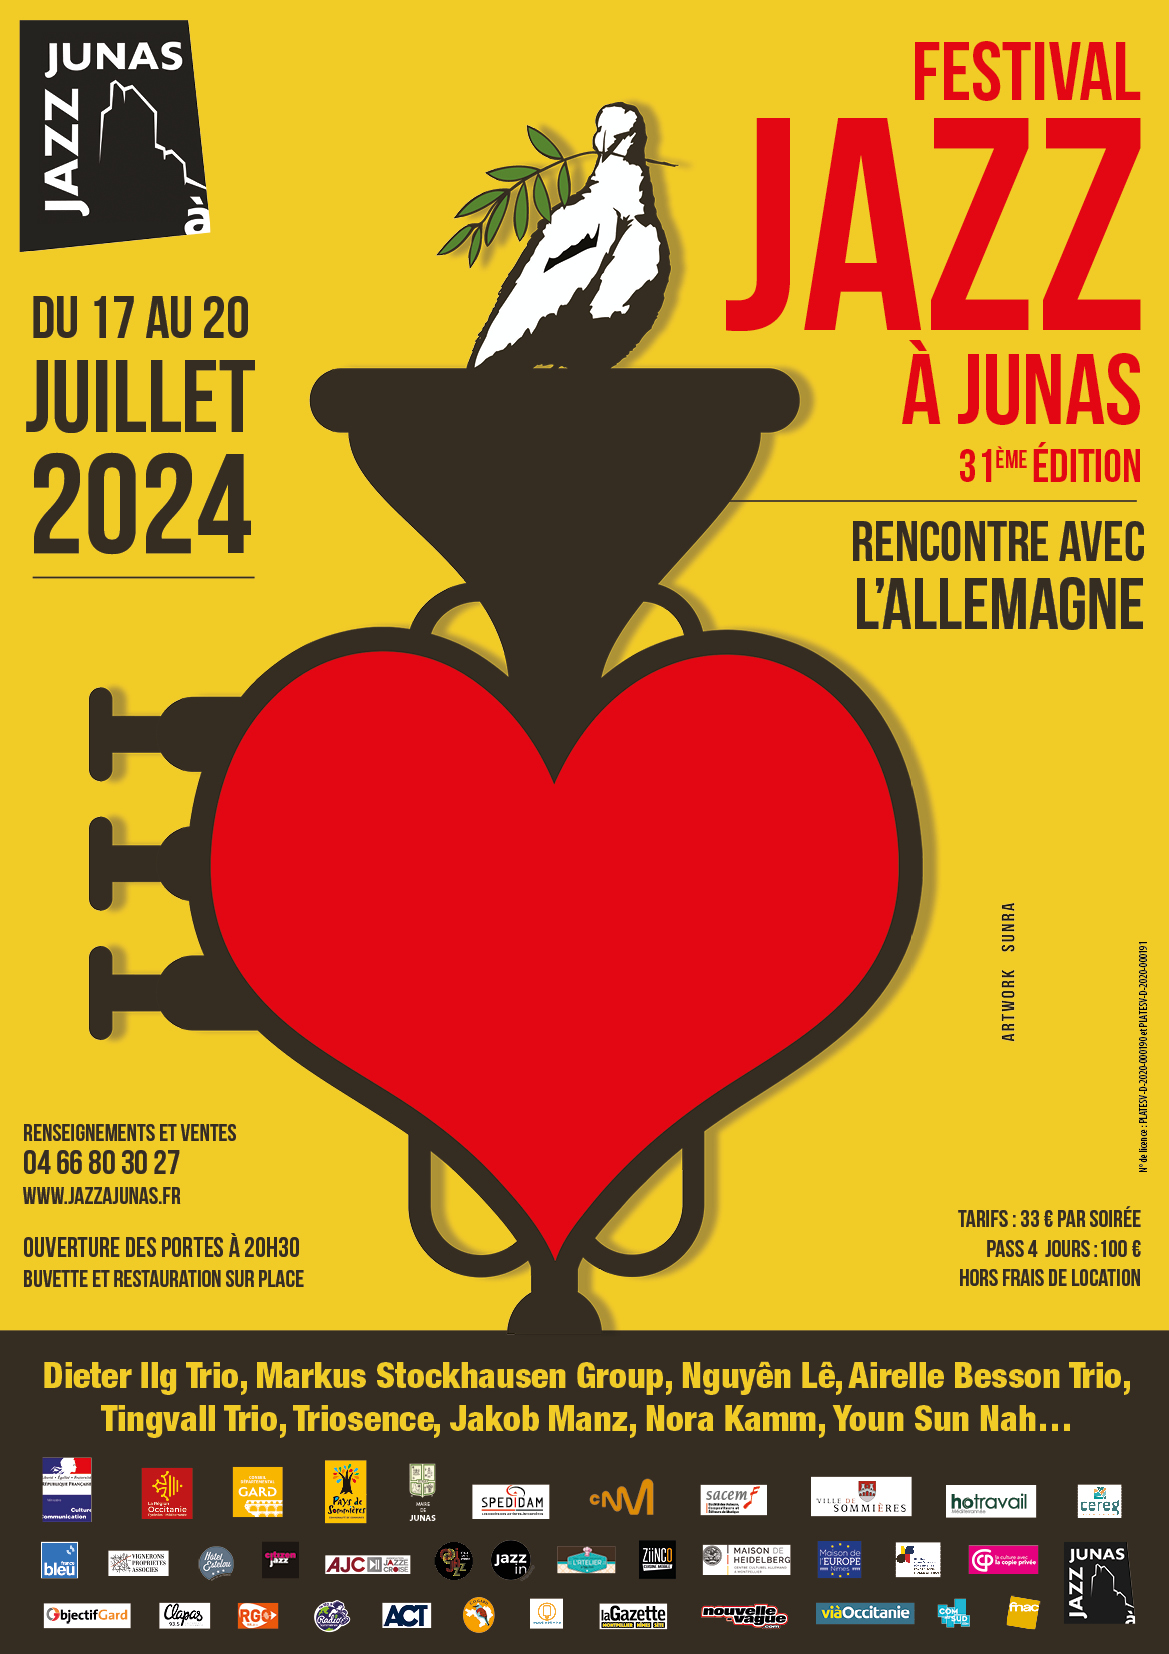 TEASER Festival Jazz à Junas 2024